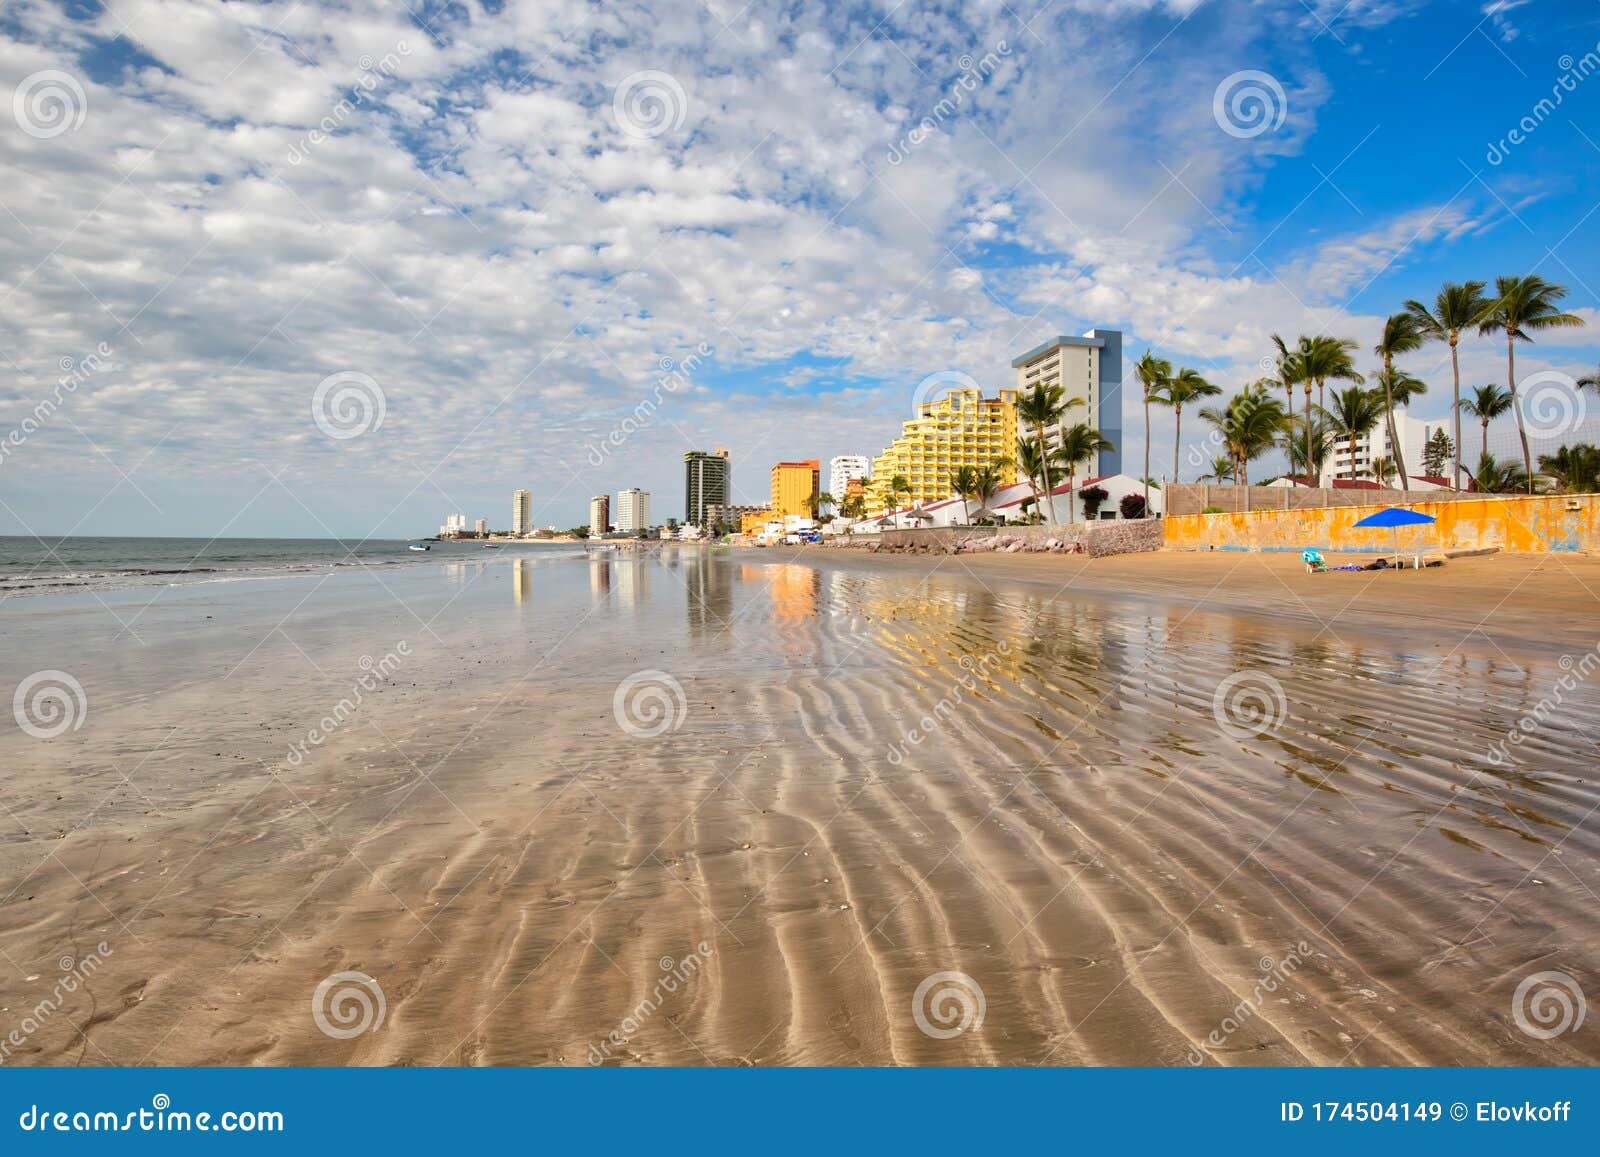 mazatlan golden zone zona dorada, famous touristic beach and resort zone in mexico